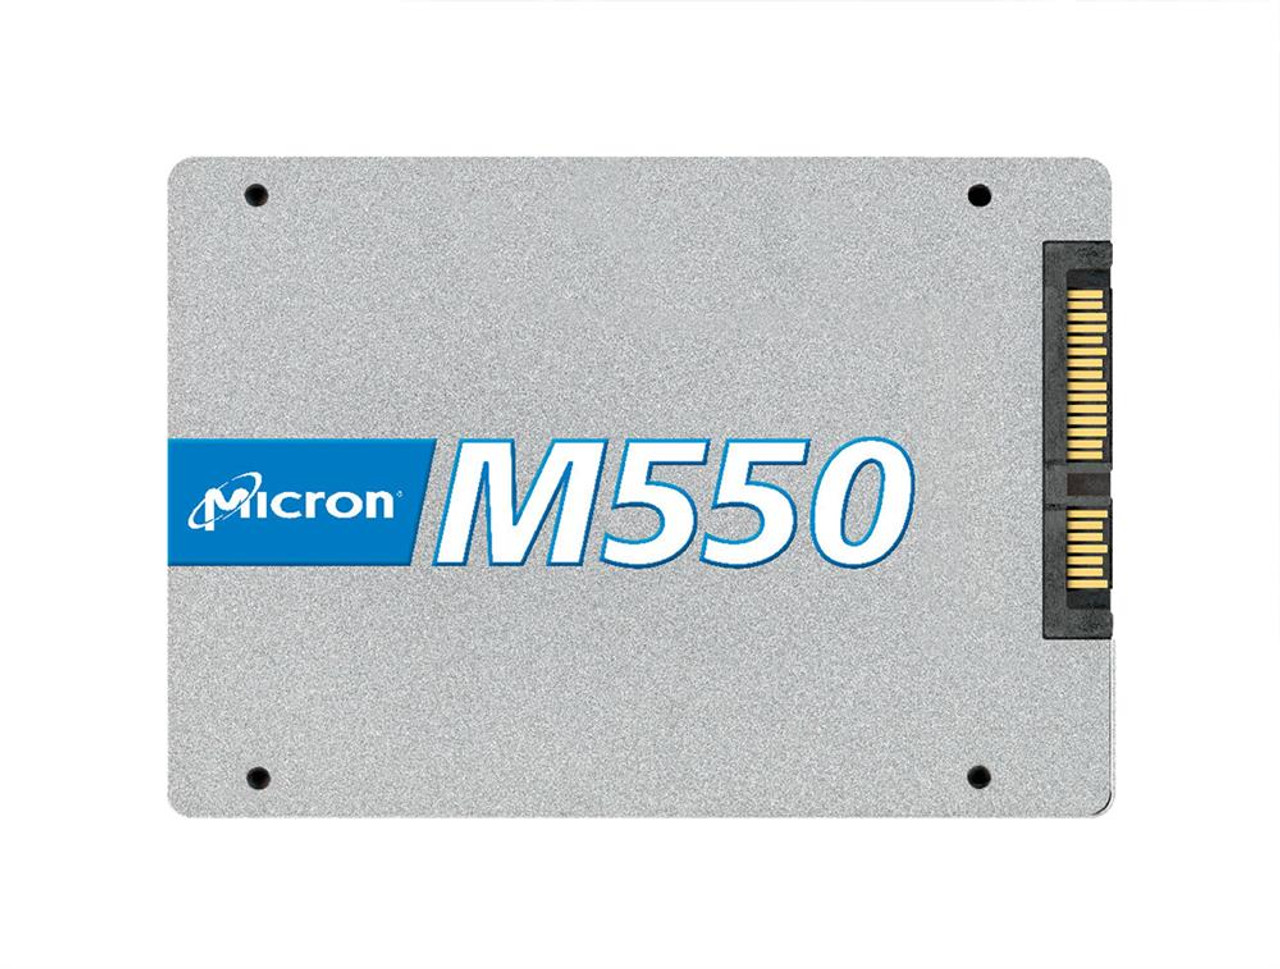 MTFDDAK256MAY-1AE12ABDA Micron M550 256GB MLC SATA 6Gbps (SED) 2.5-inch Internal Solid State Drive (SSD)